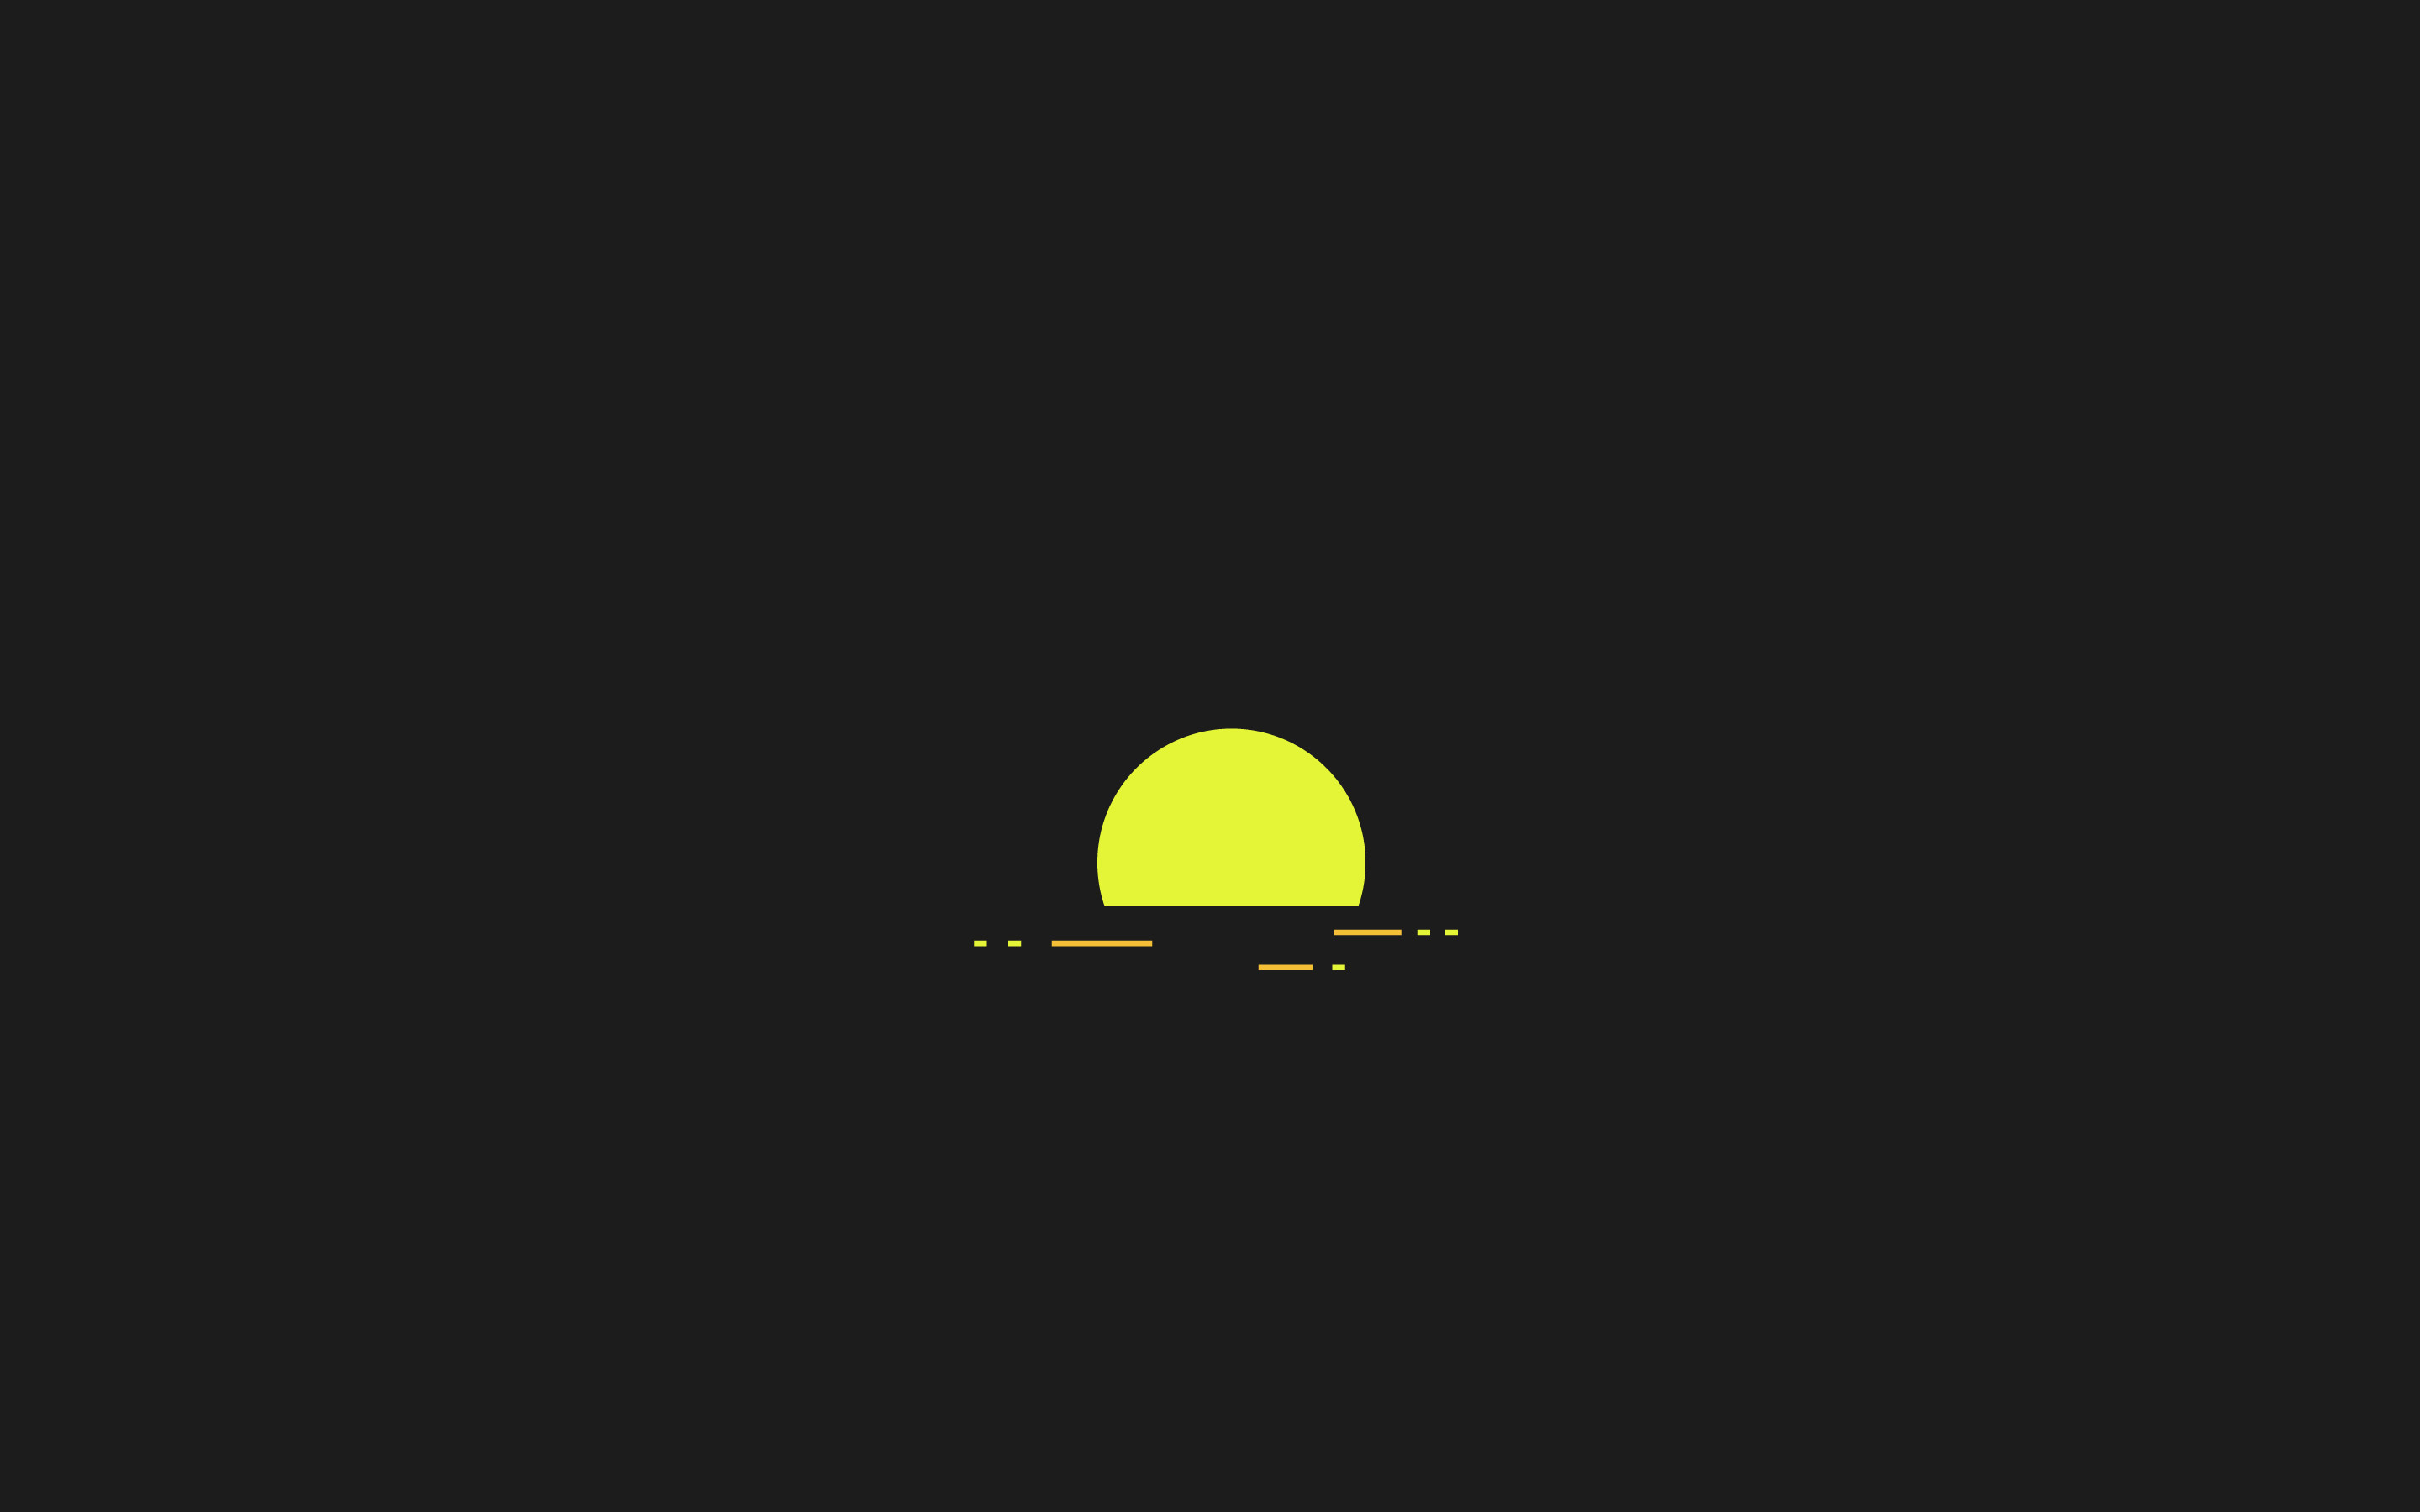 A yellow sun on a black background - Minimalist, sun